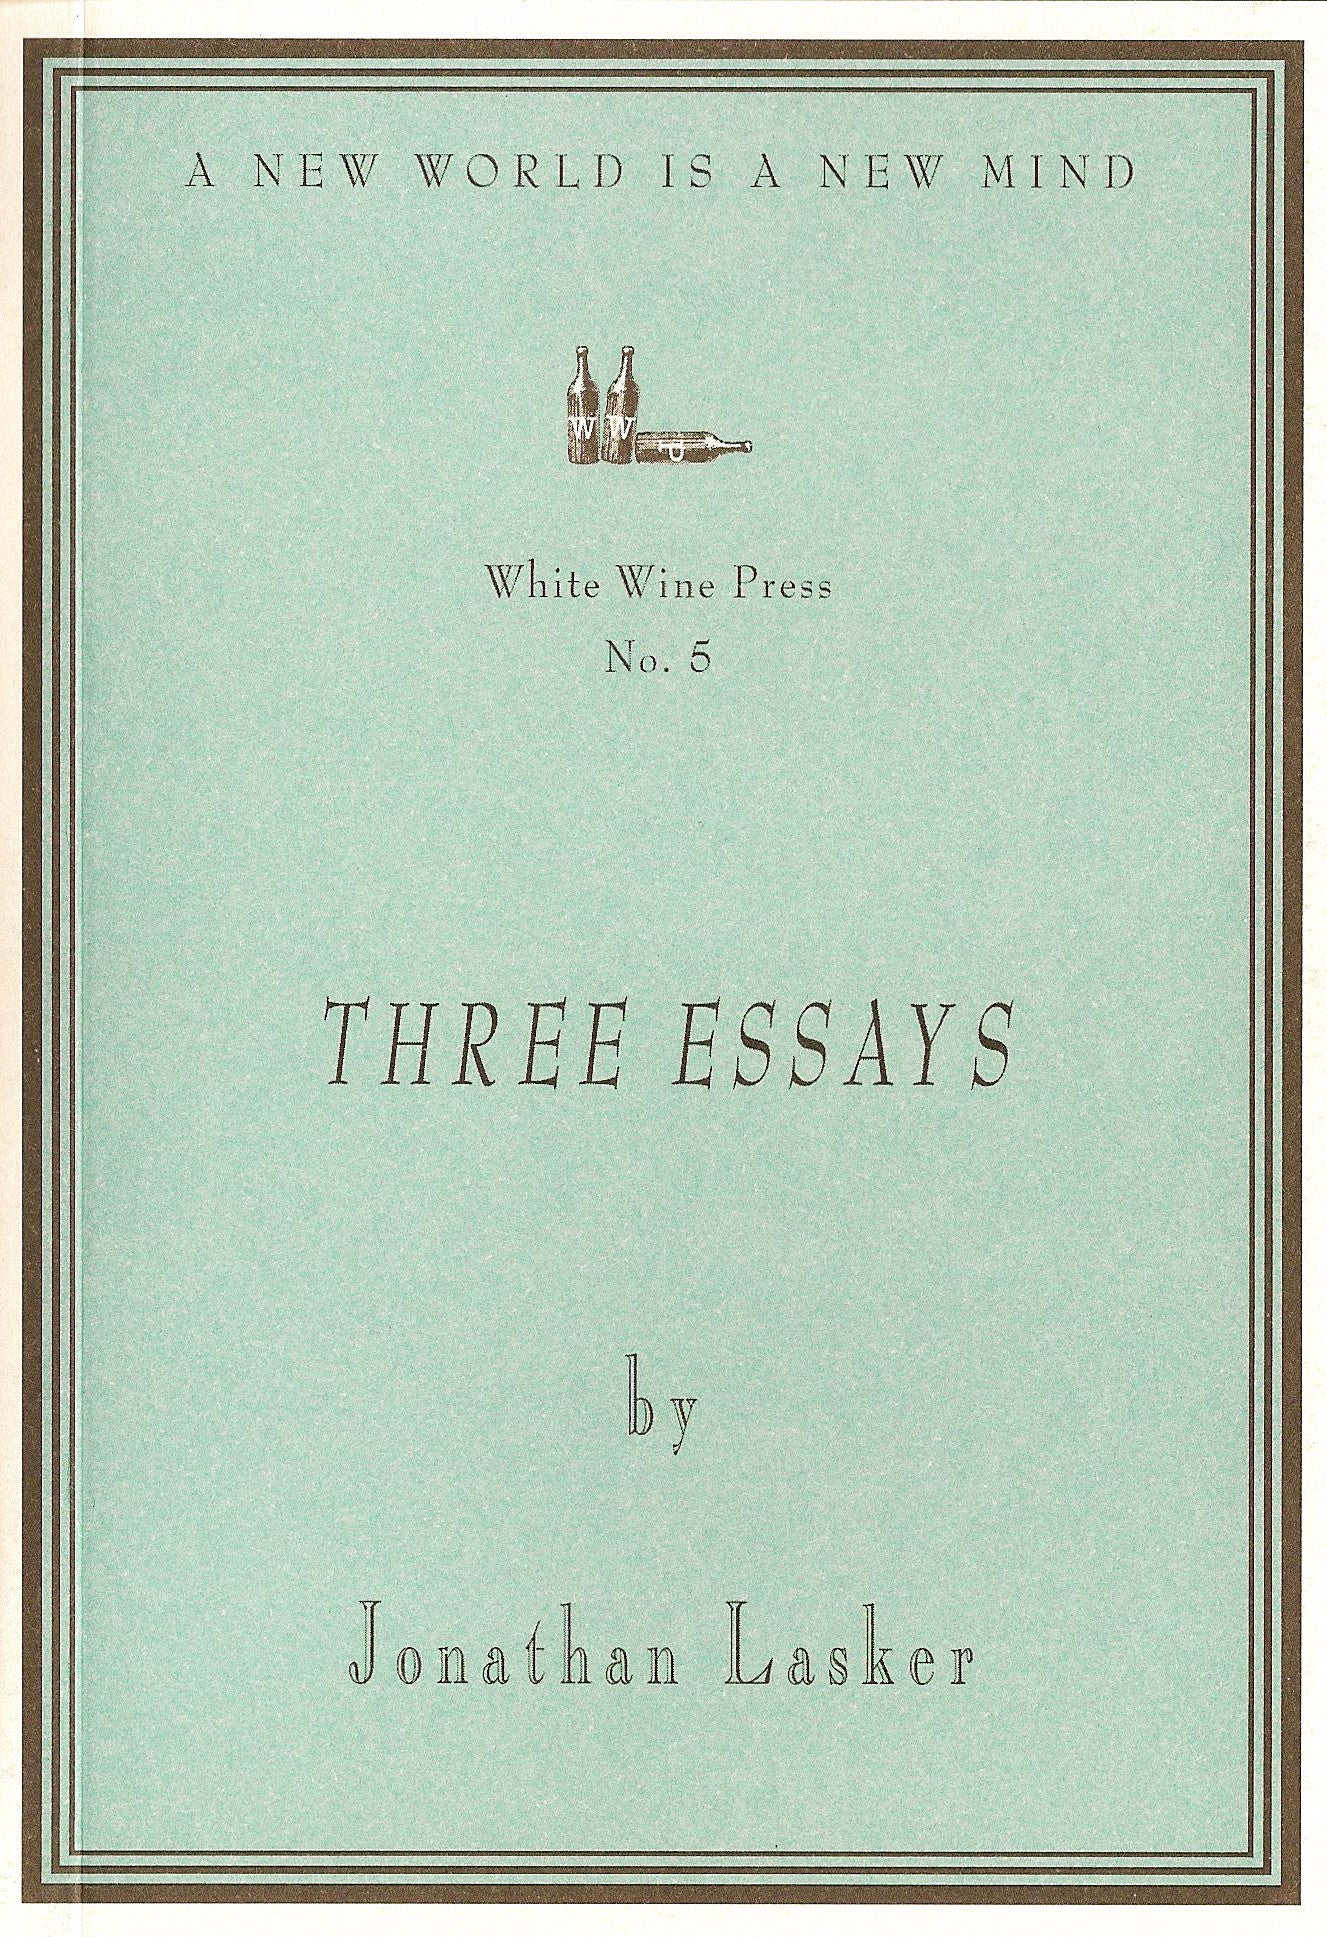 Three Essays by Jonathan Lasker [White Wine Press No. 5]